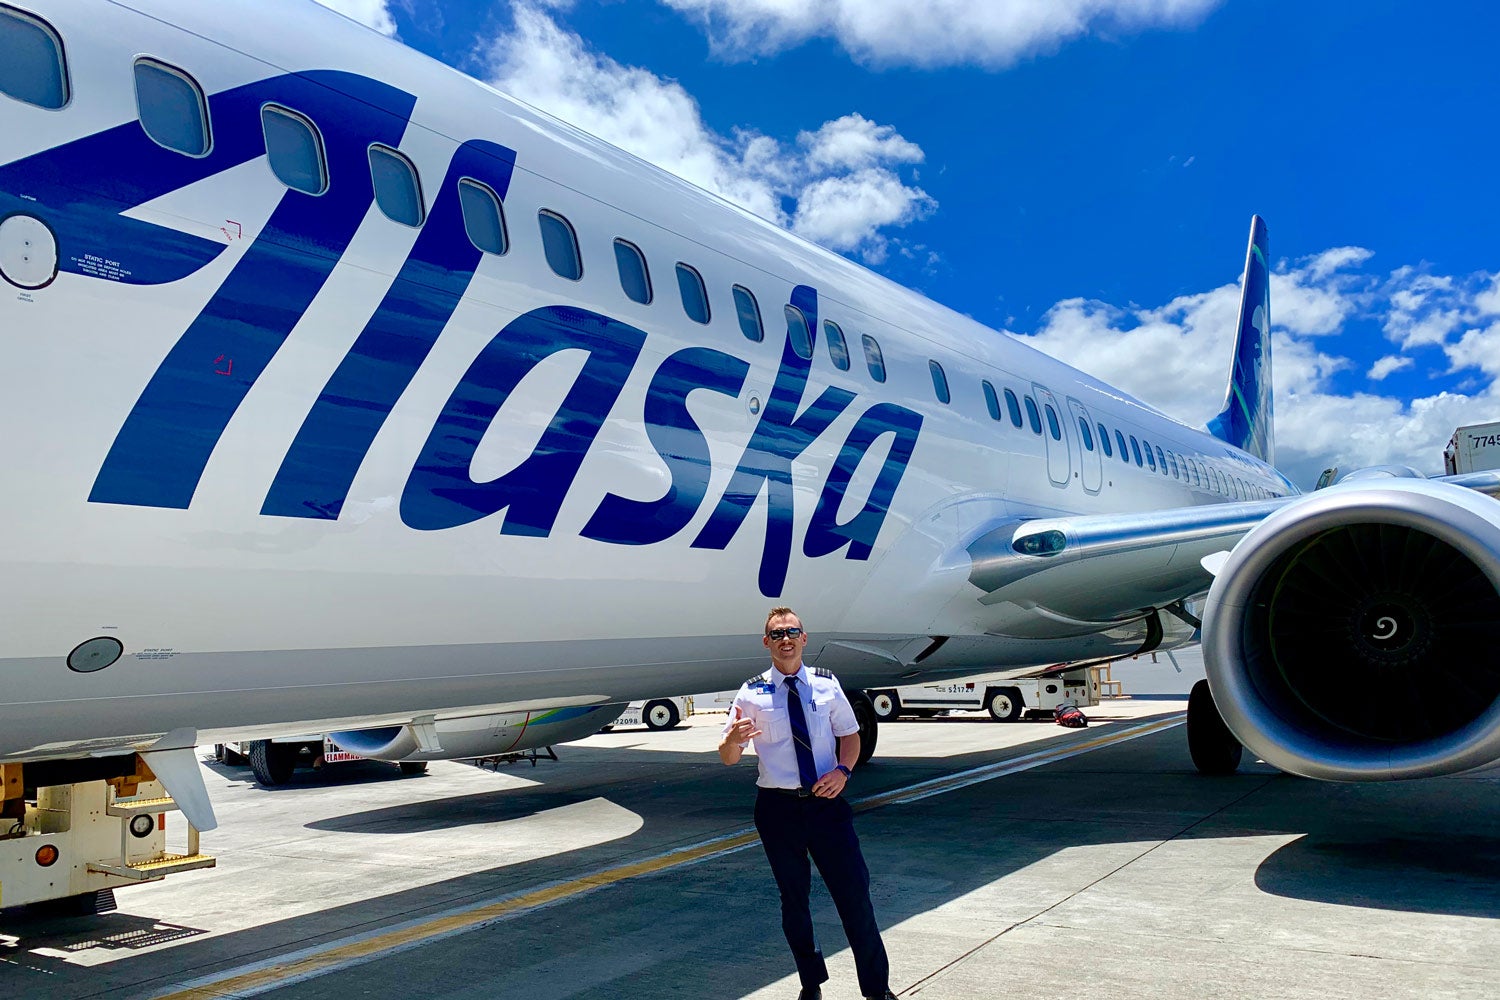 Richard Ethington: First Officer at Alaska Airlines